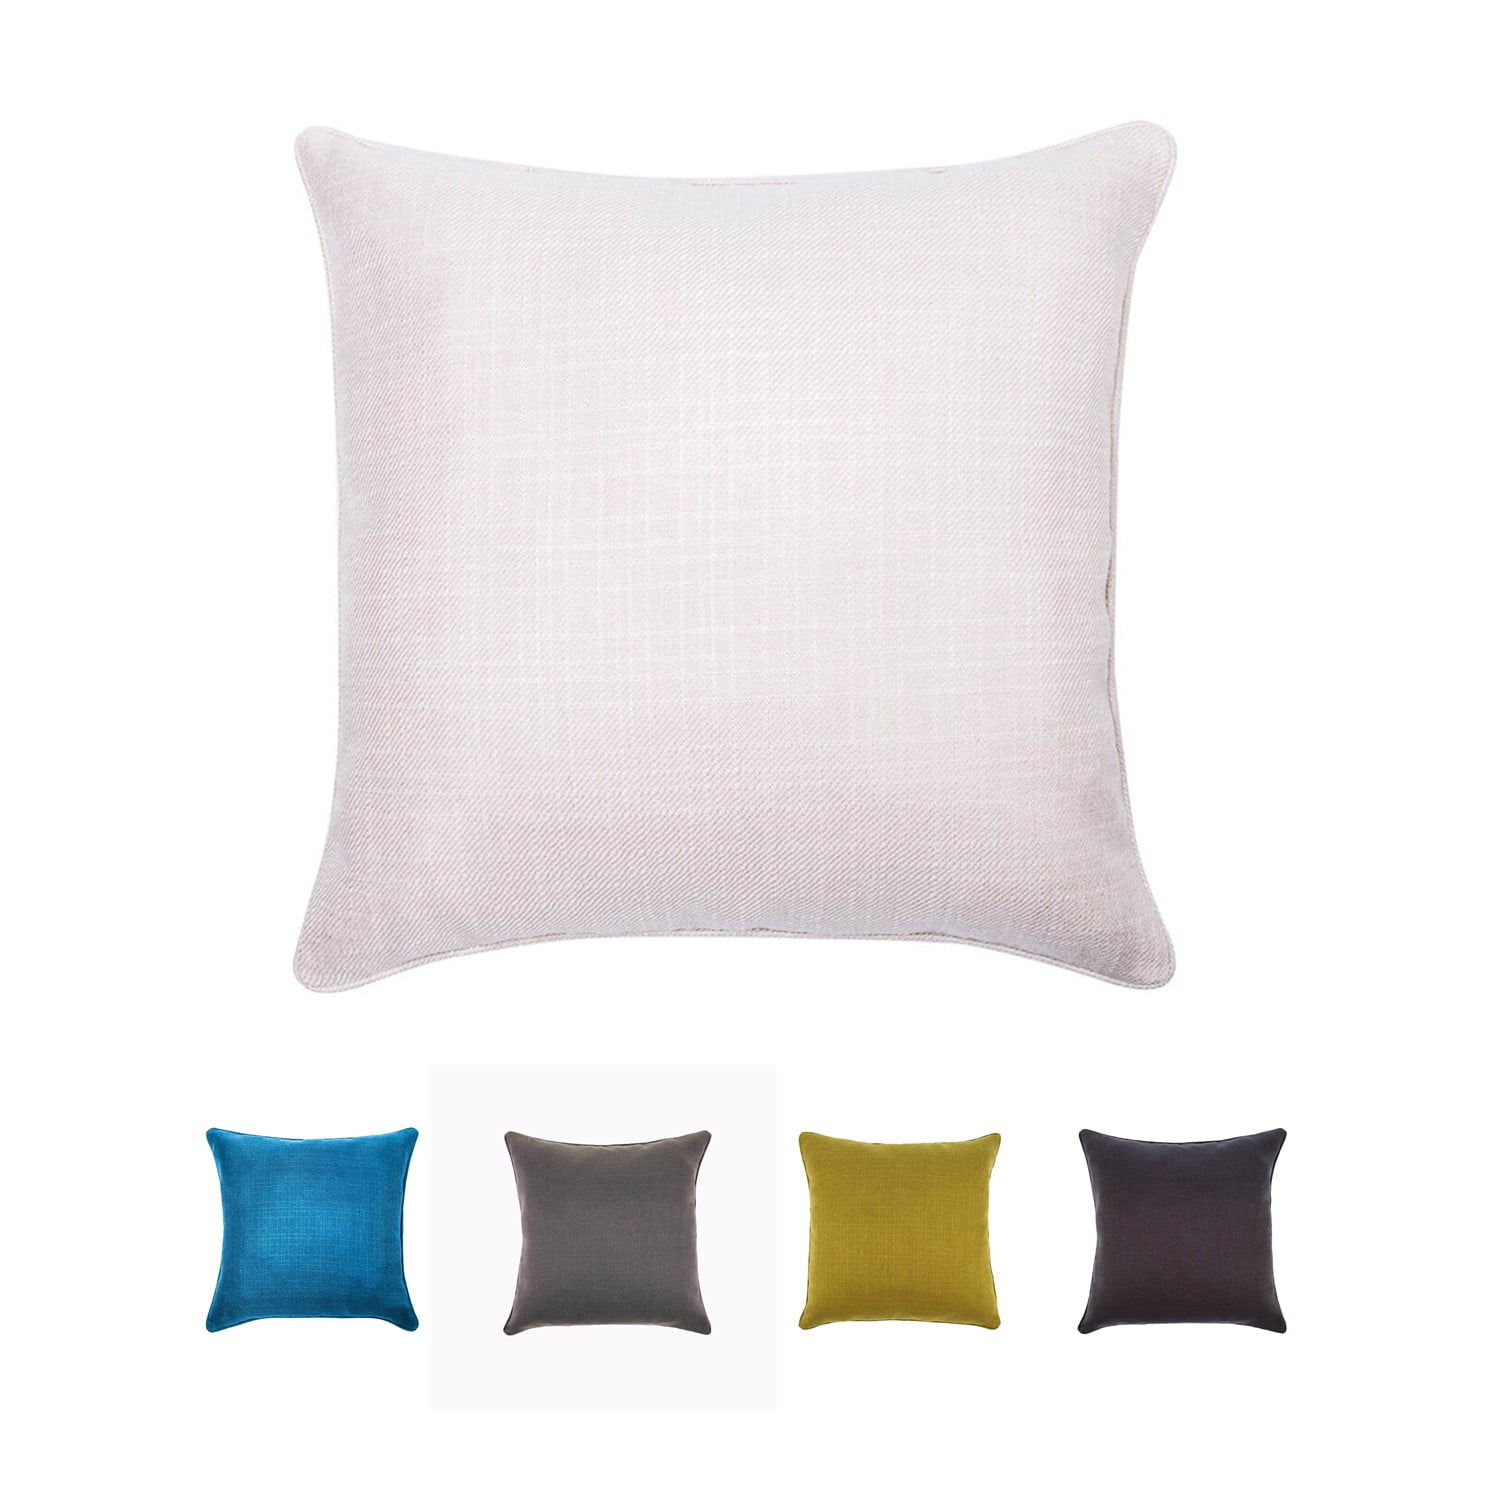 Linen Pillow Covers Cases Textured Faux Solid Color Throw Pillow Case Soft 18 X 18 Inches 45x45cm Snow White Walmart Com Walmart Com